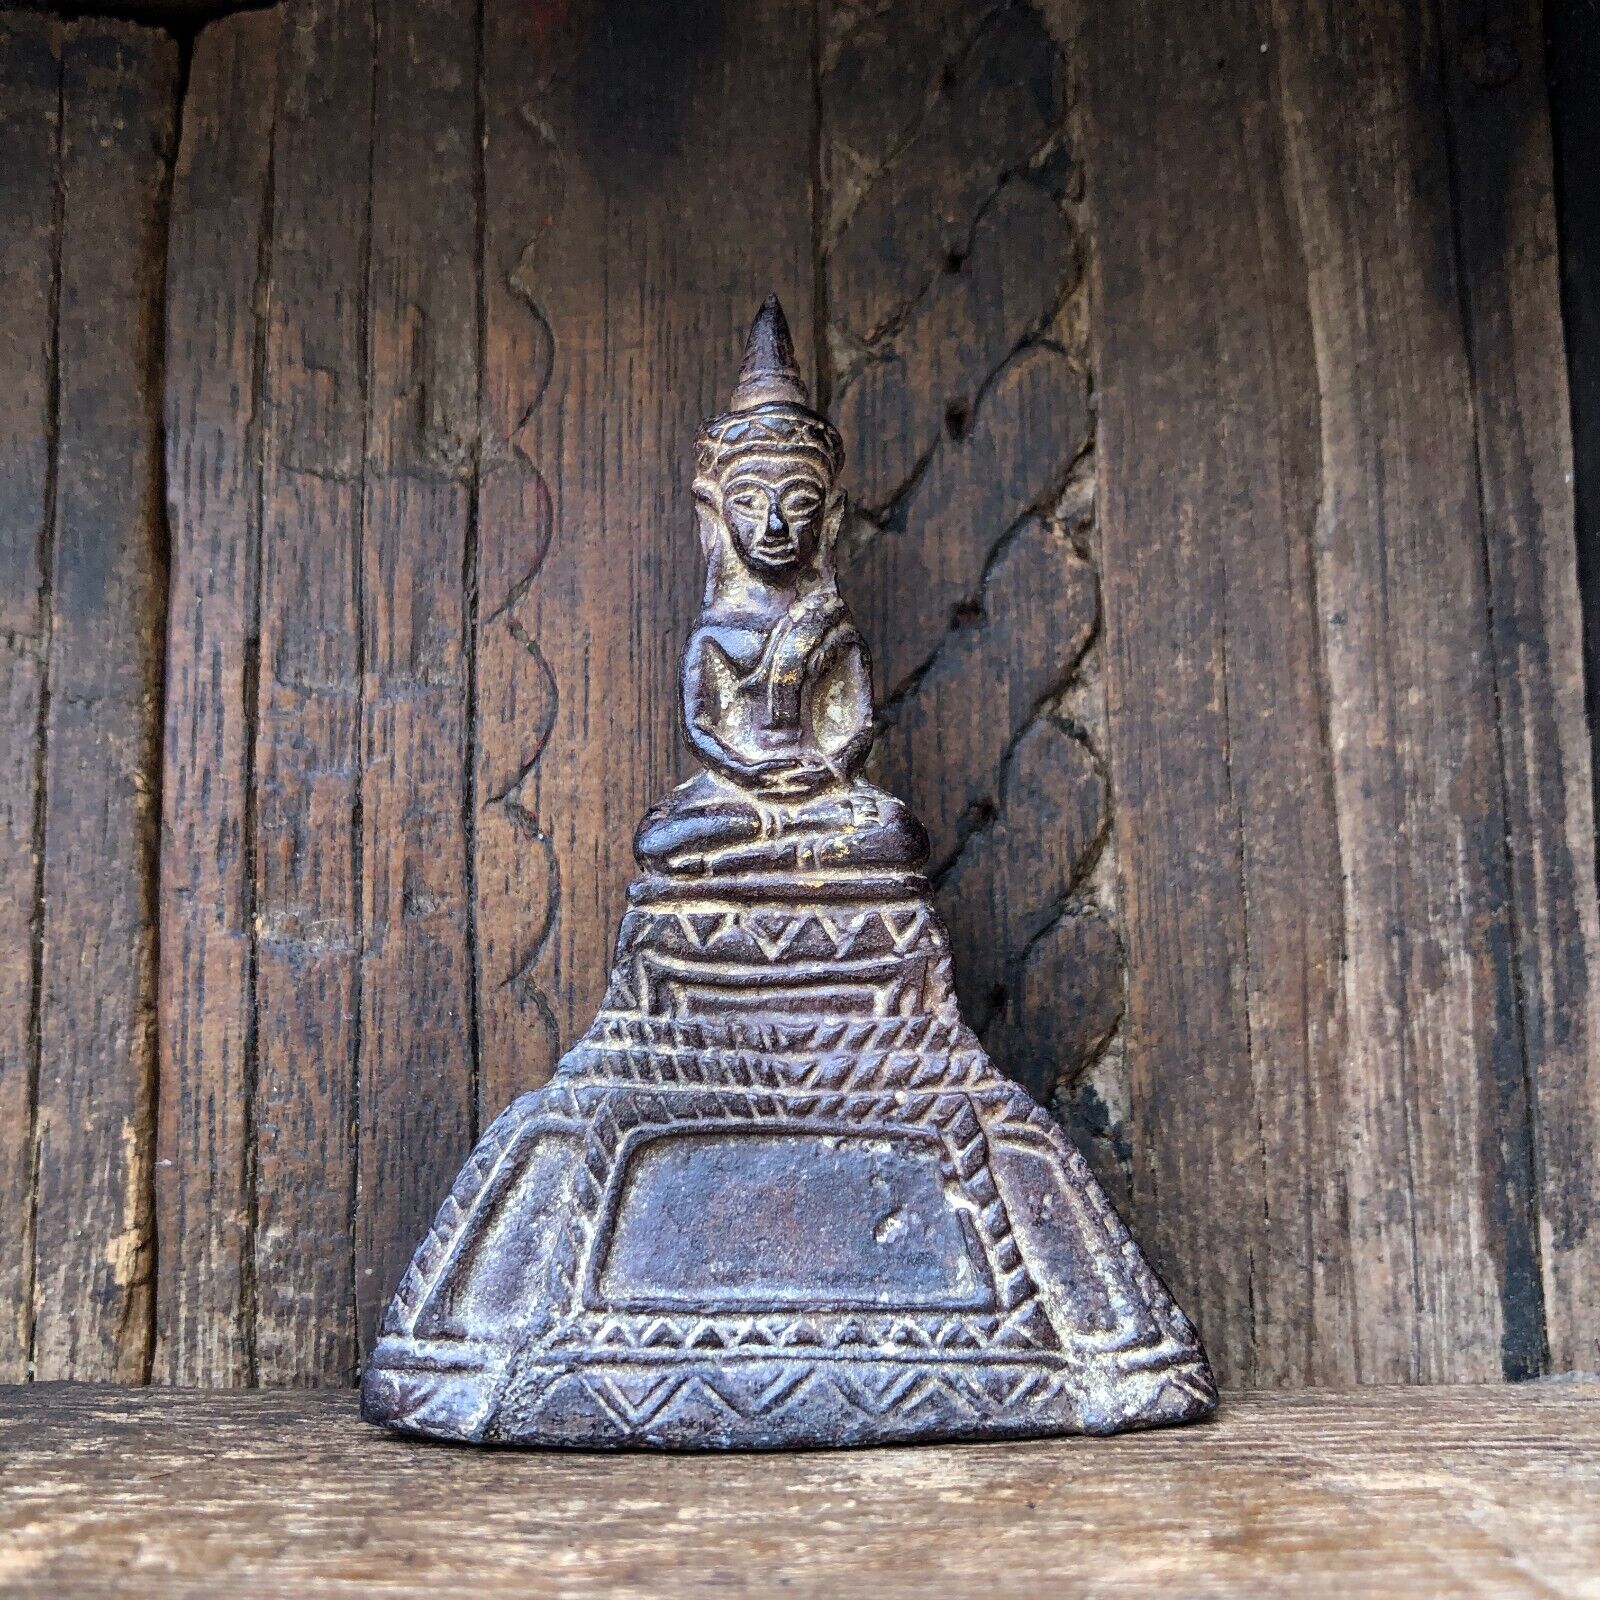 Seated Buddha Figurine